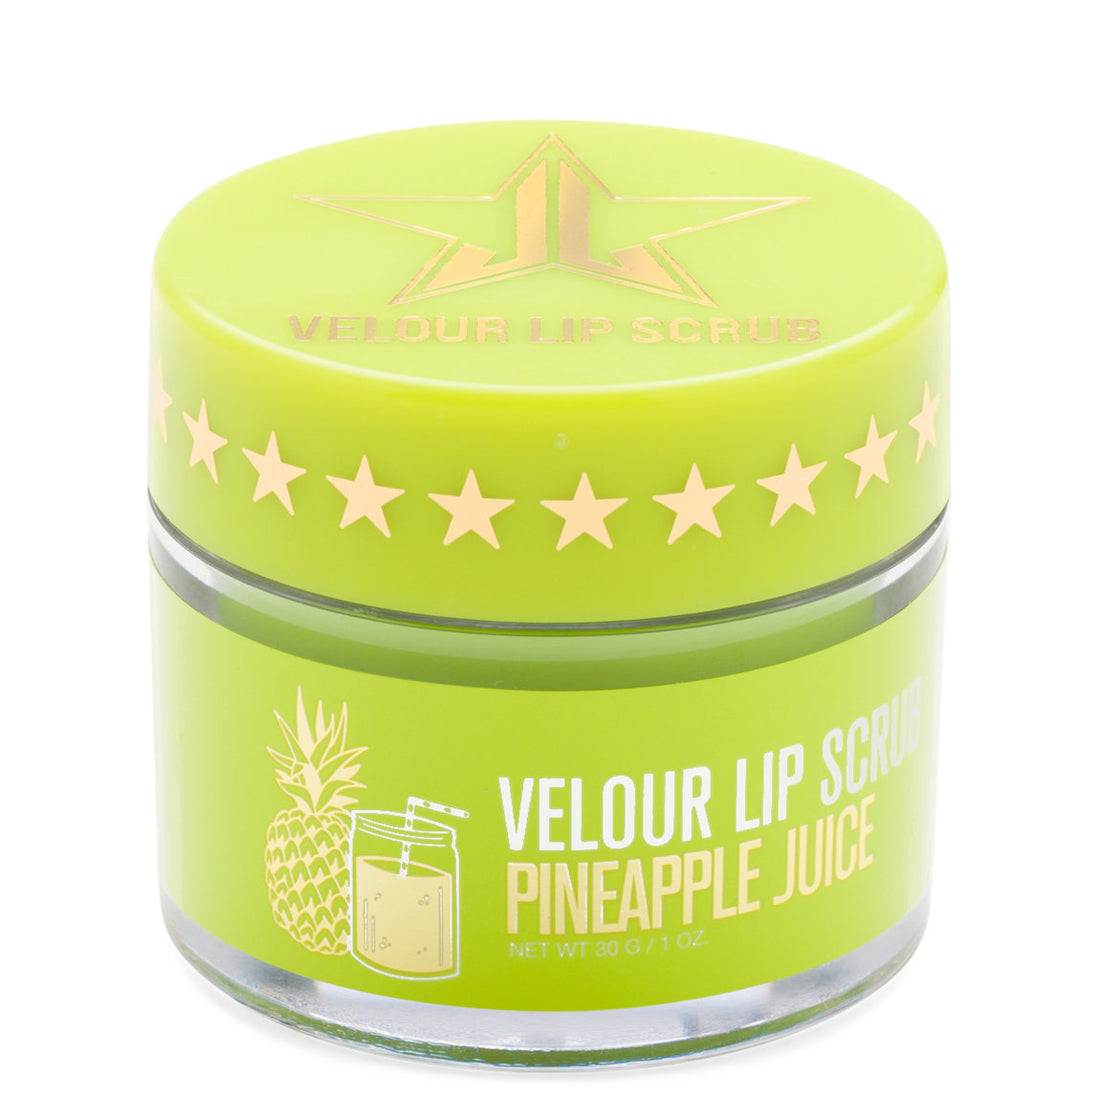 Velour Lip Scrub - Pineapple Juice